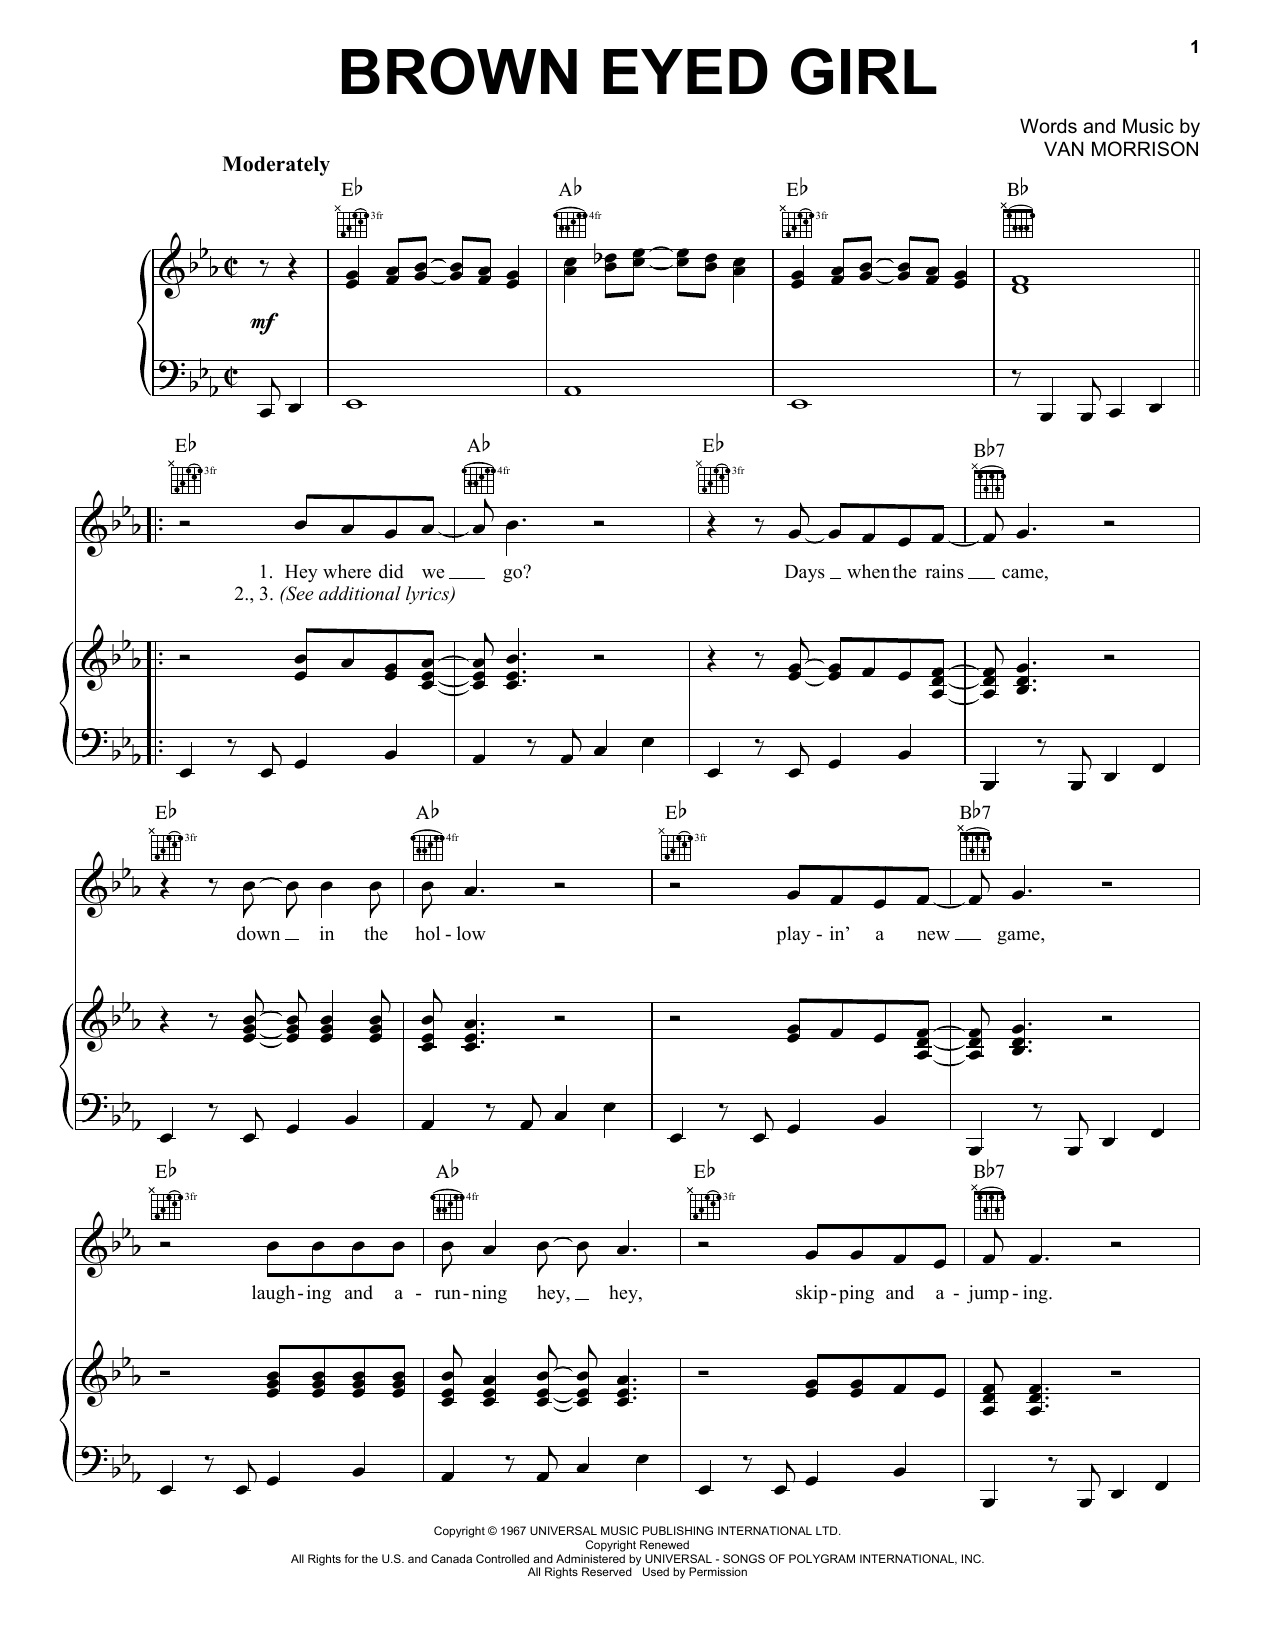 Van Morrison Brown Eyed Girl Sheet Music Notes & Chords for Clarinet - Download or Print PDF